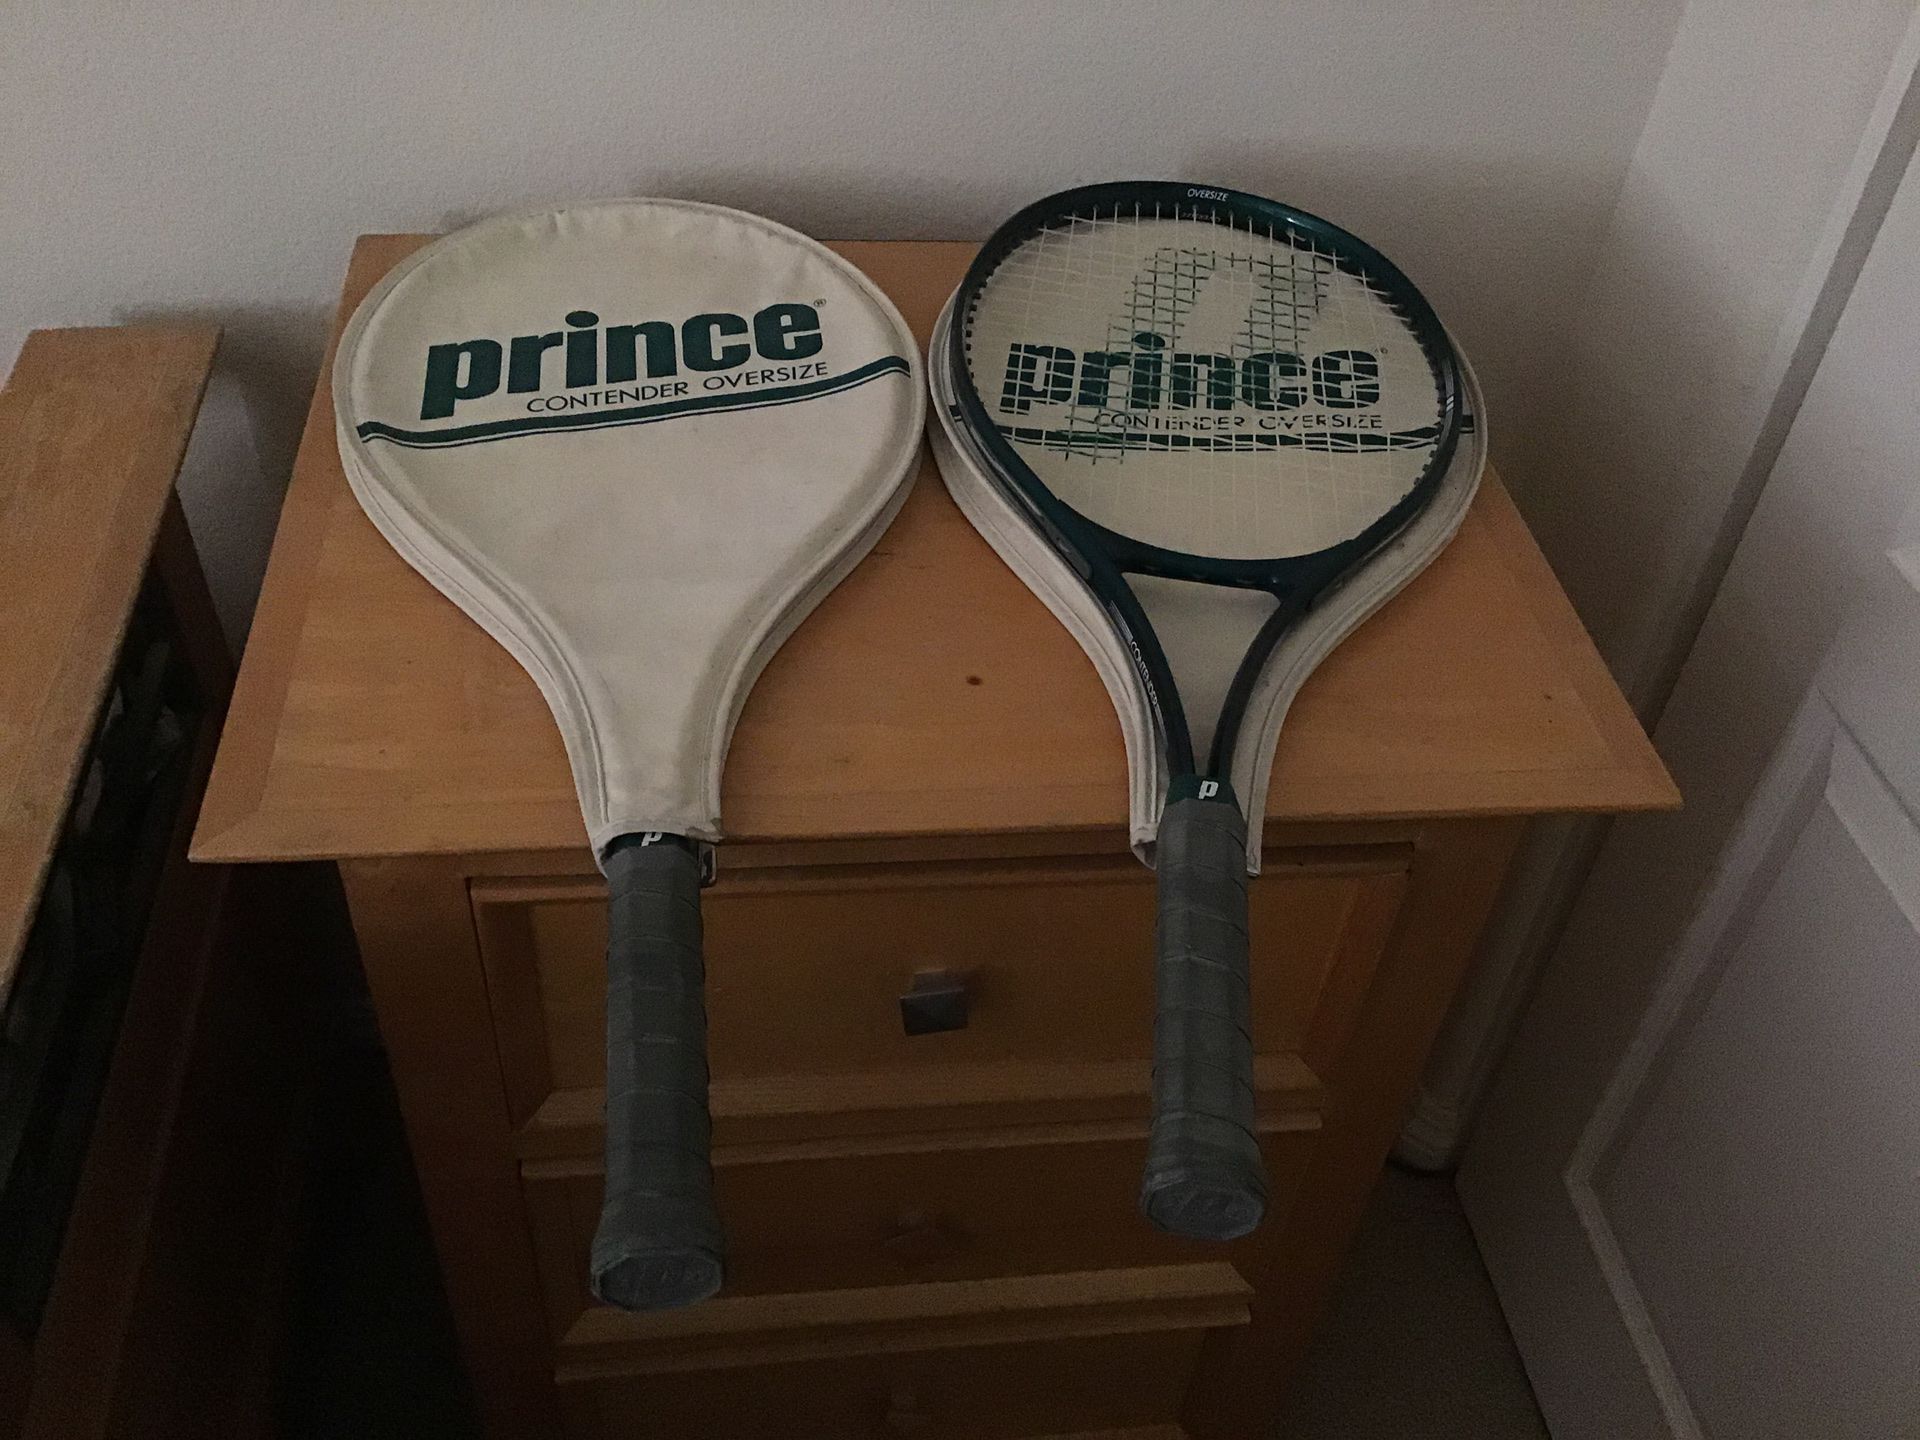 Prince contender oversize tennis rackets 2ea.